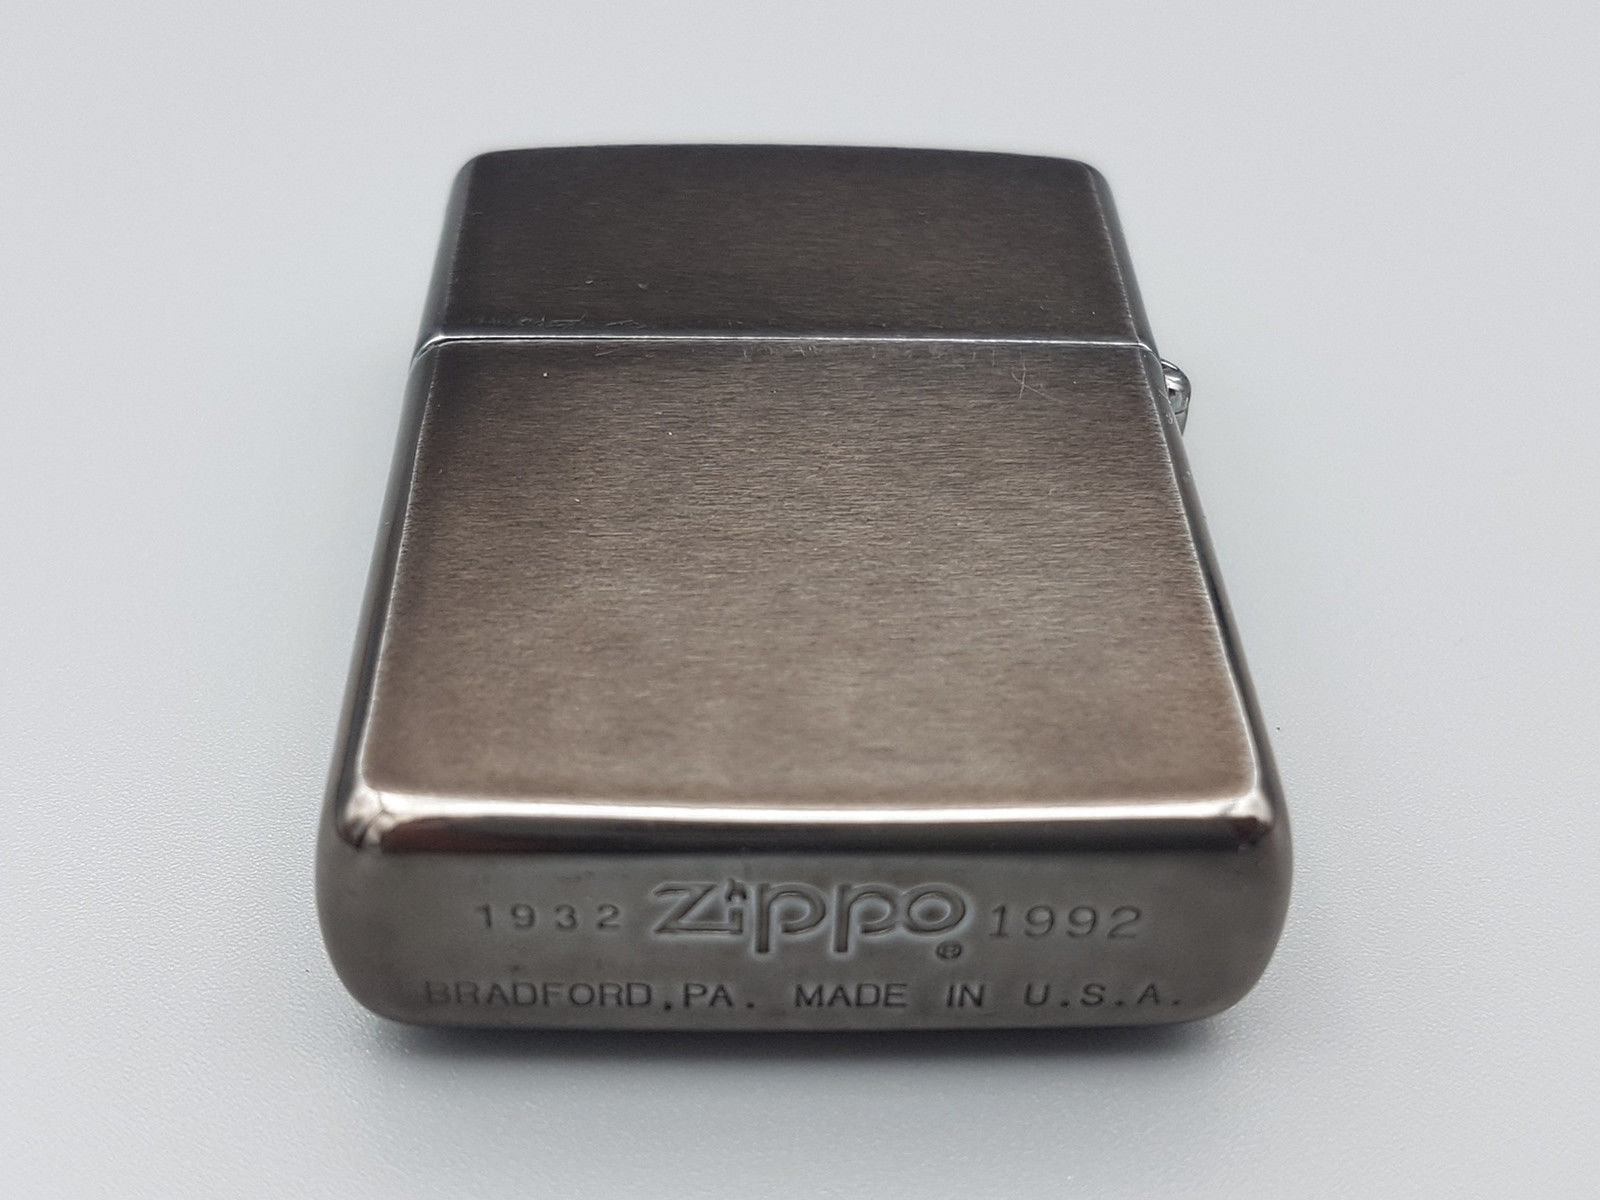 Value of 1932-1992 ZIPPO 60TH ANNIVERSARY Midnight Chrome Lighter 